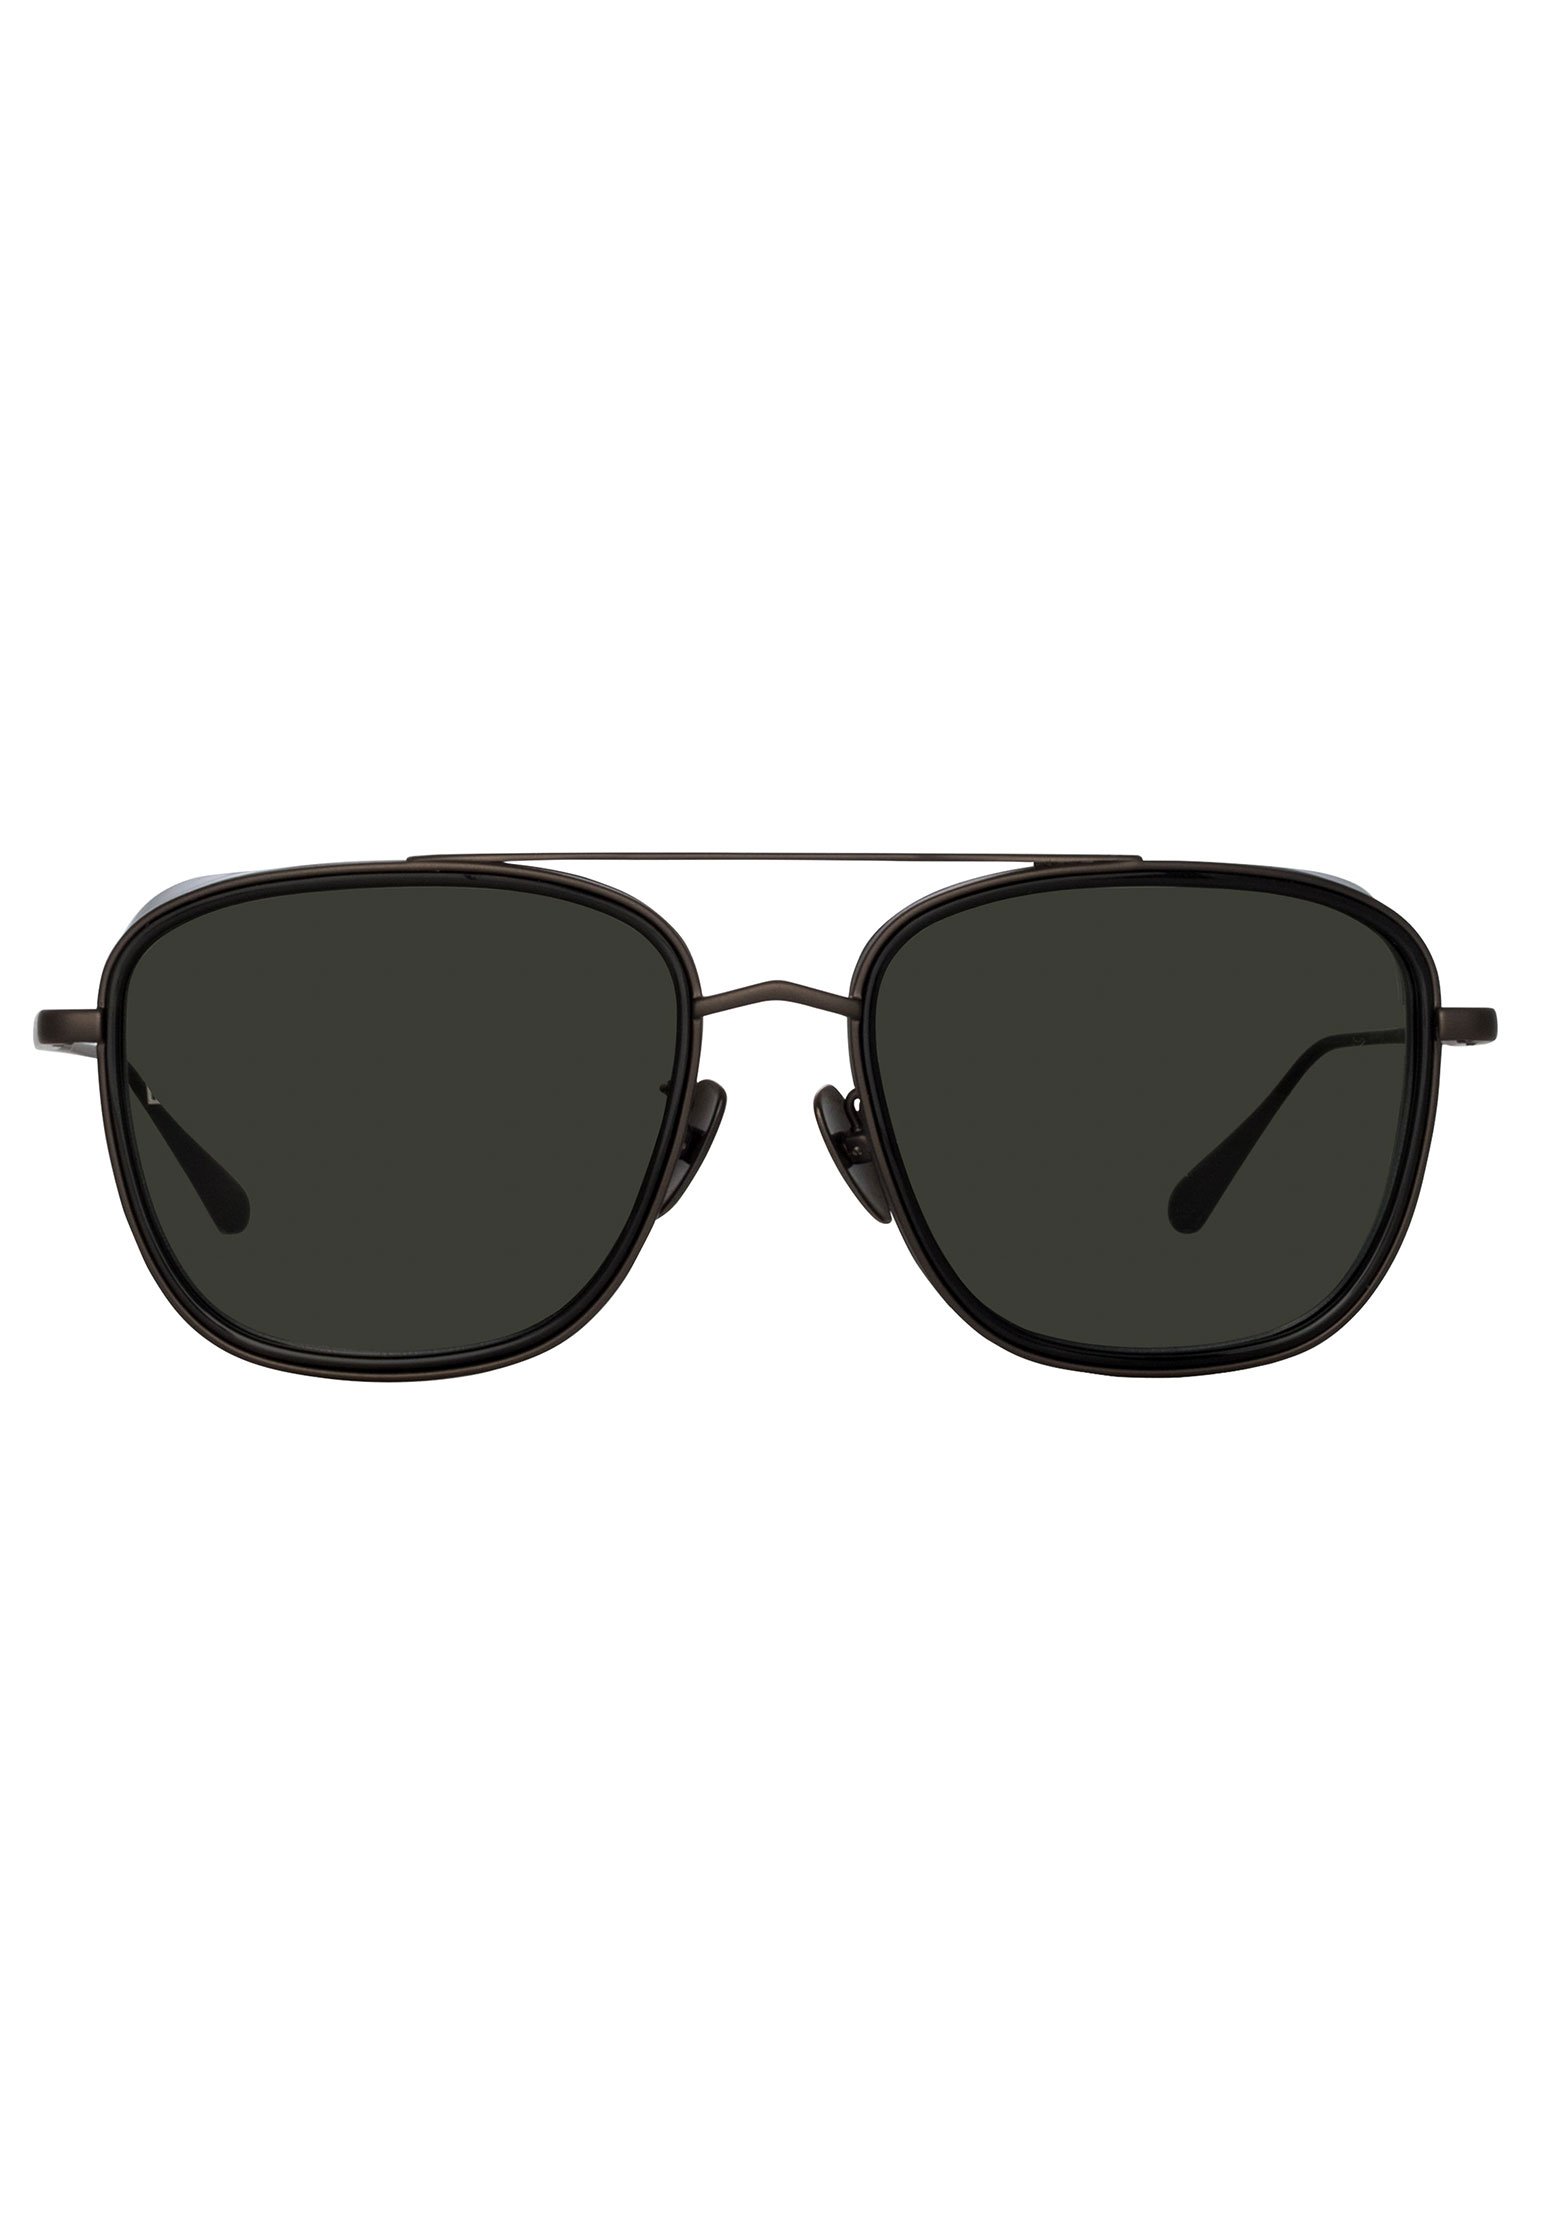 Sunglasses LINDA FARROW Color: black (Code: 4030) in online store Allure